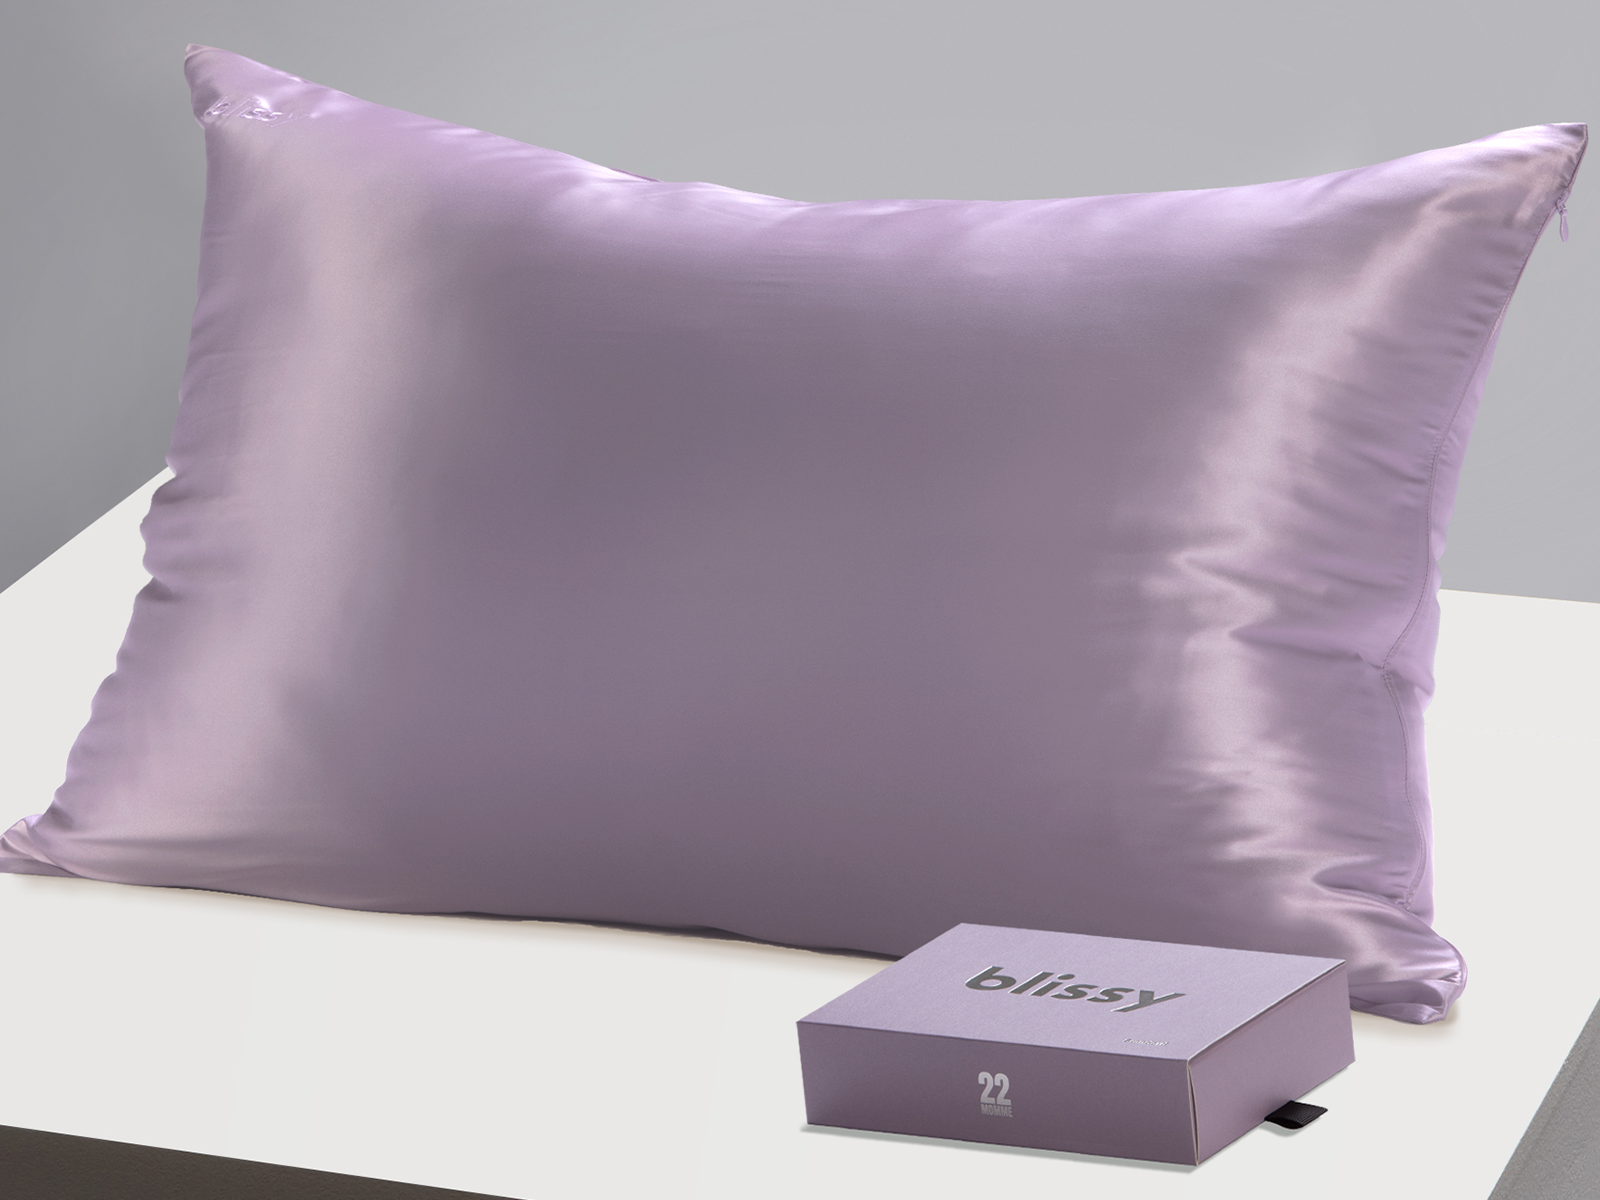 Blissy Queen 100% Mulberry Silk Pillowcase | Lavender